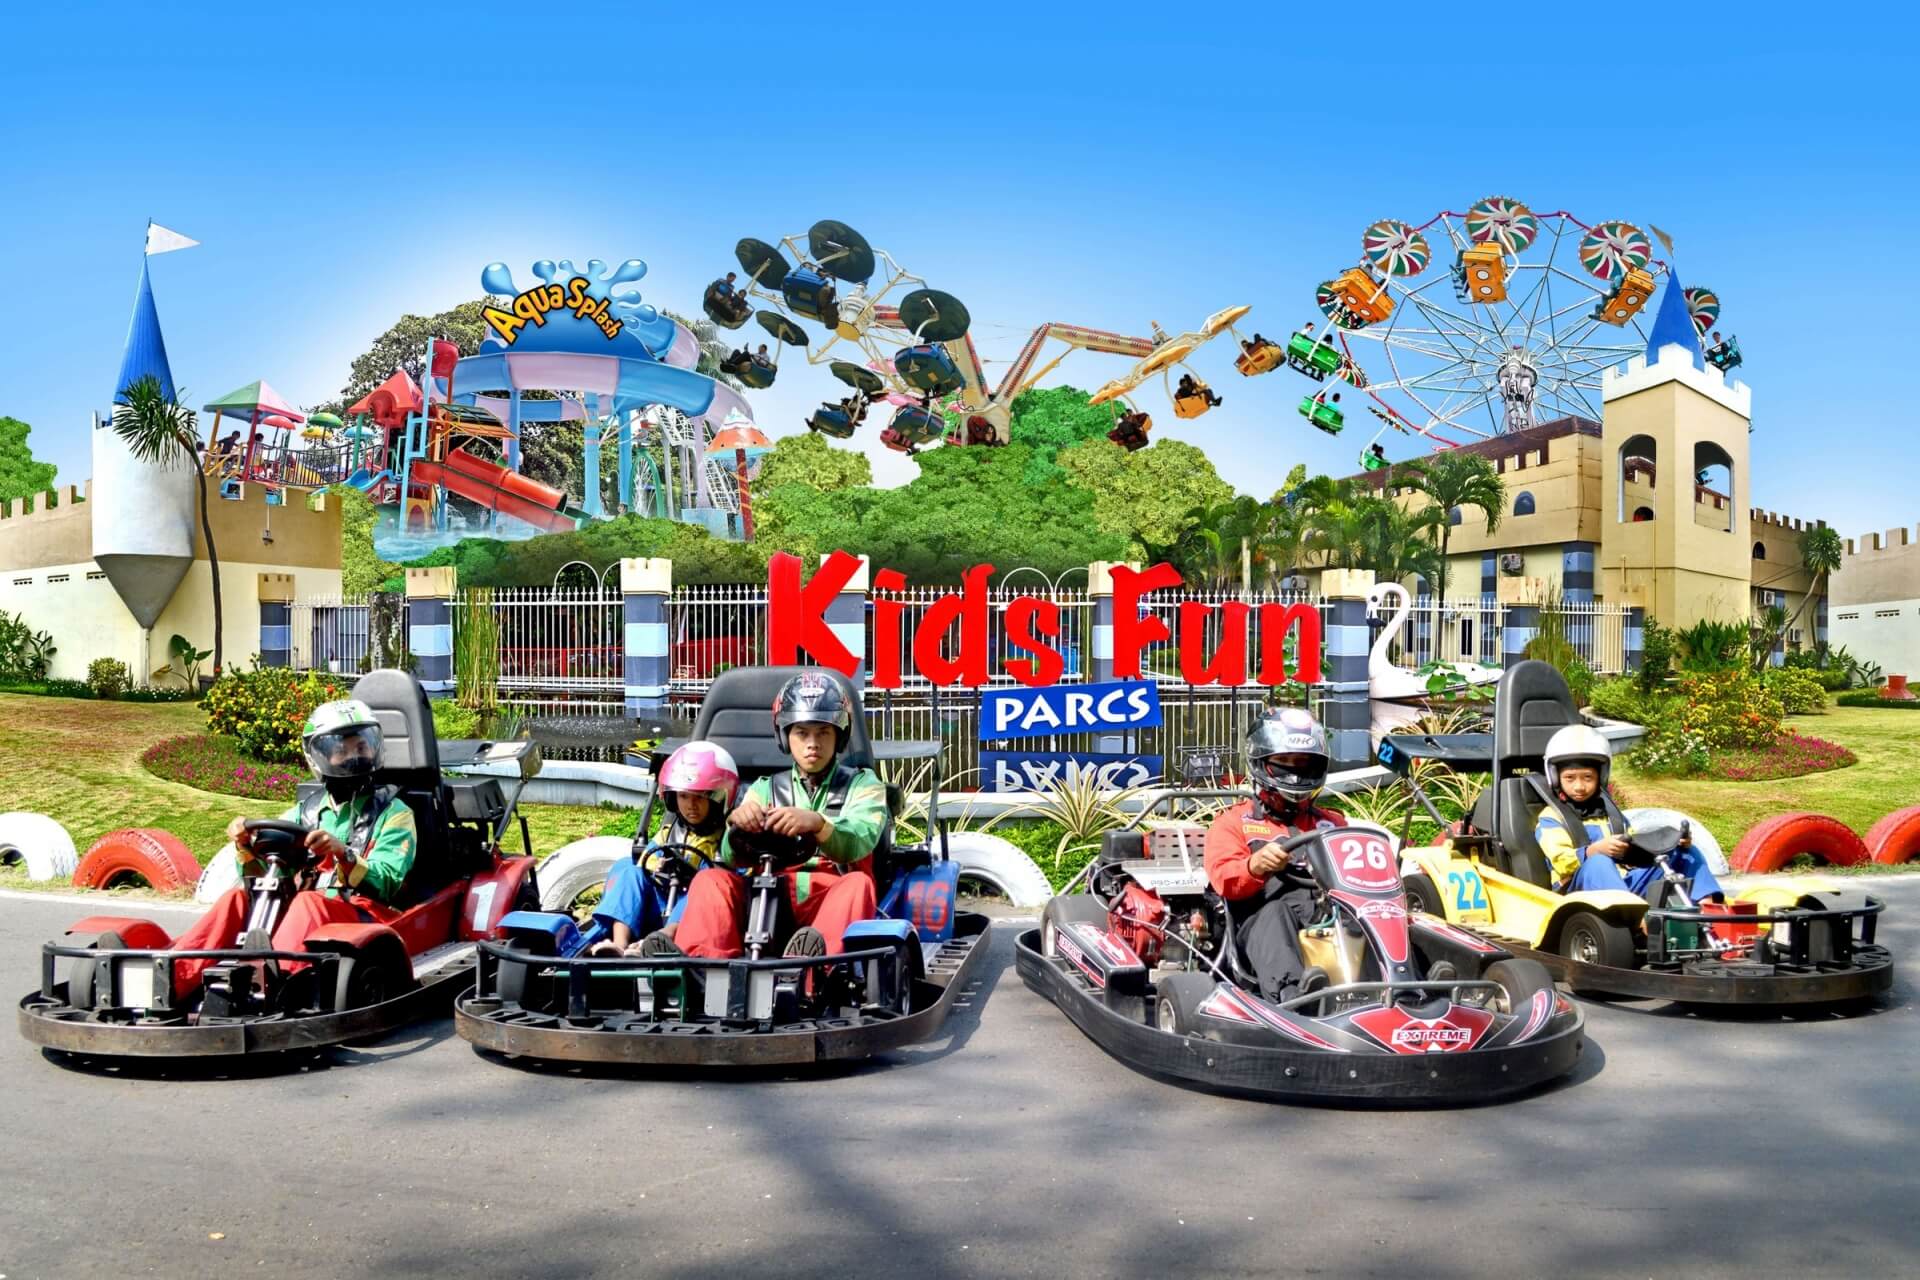 Tempat wisata anak di Jogja, Kids Fun Parcs Yogyakarta, Sumber: kidsfun.co.id